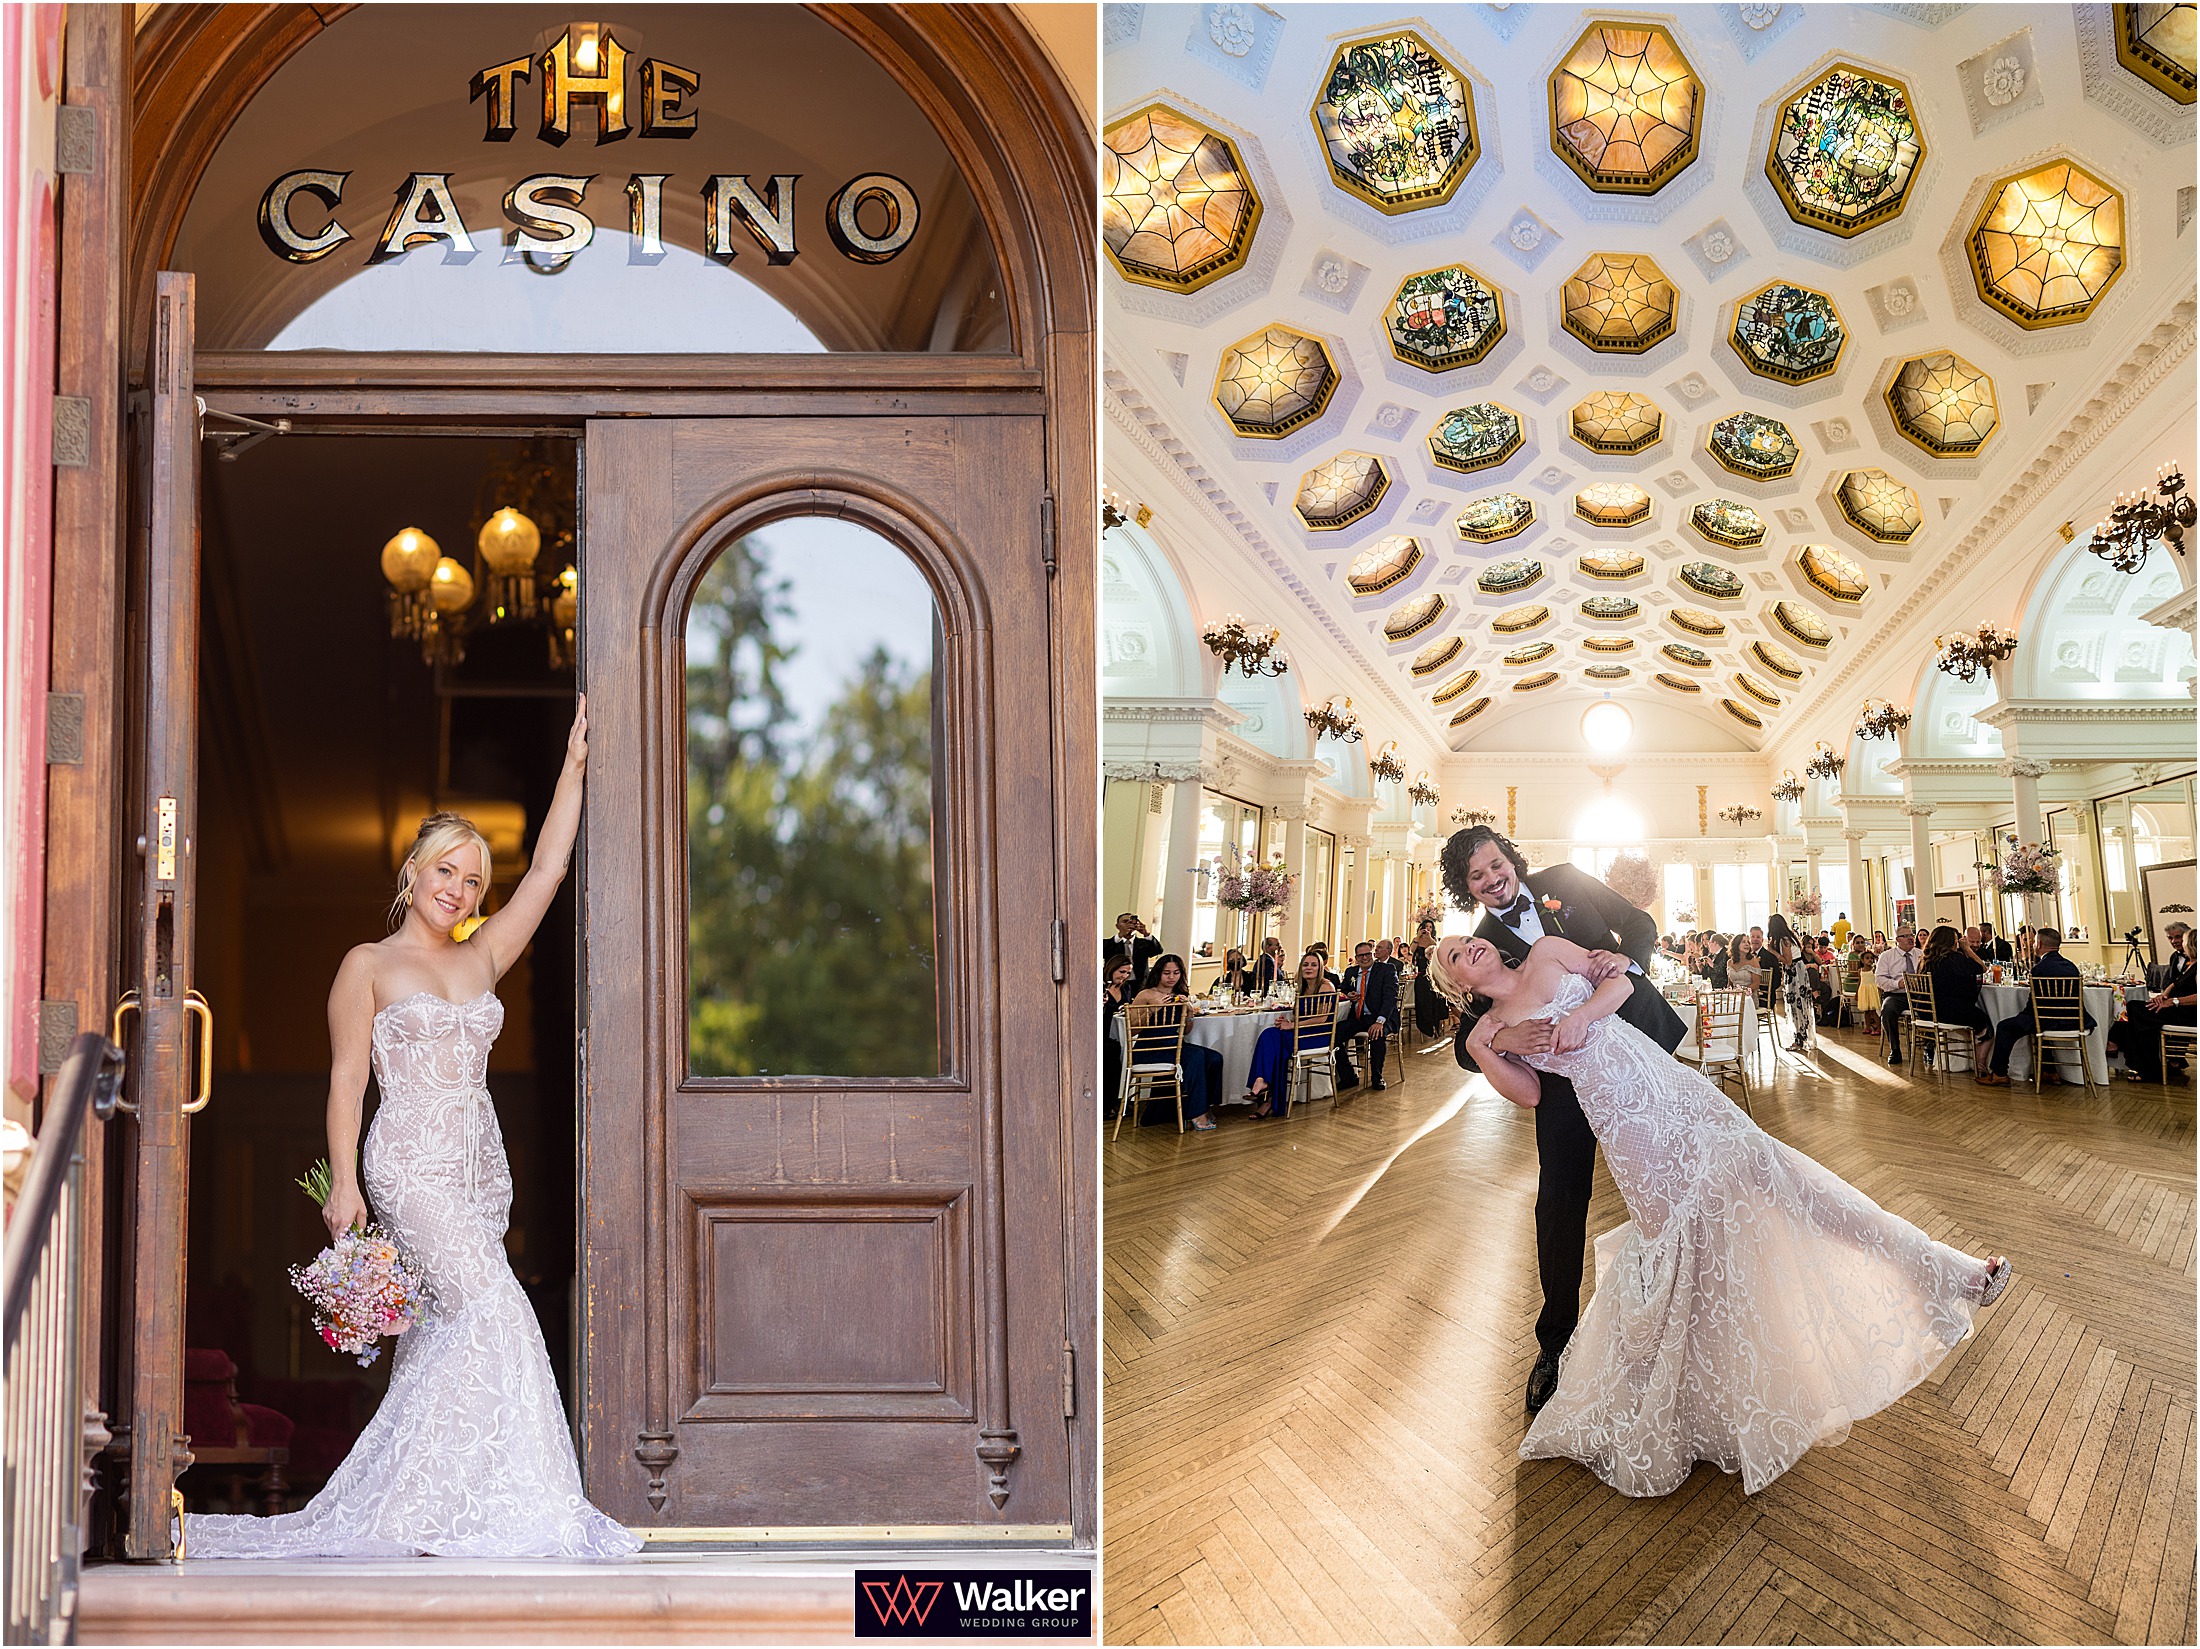 Canfield Casino Wedding Venue in Saratoga Springs NY 